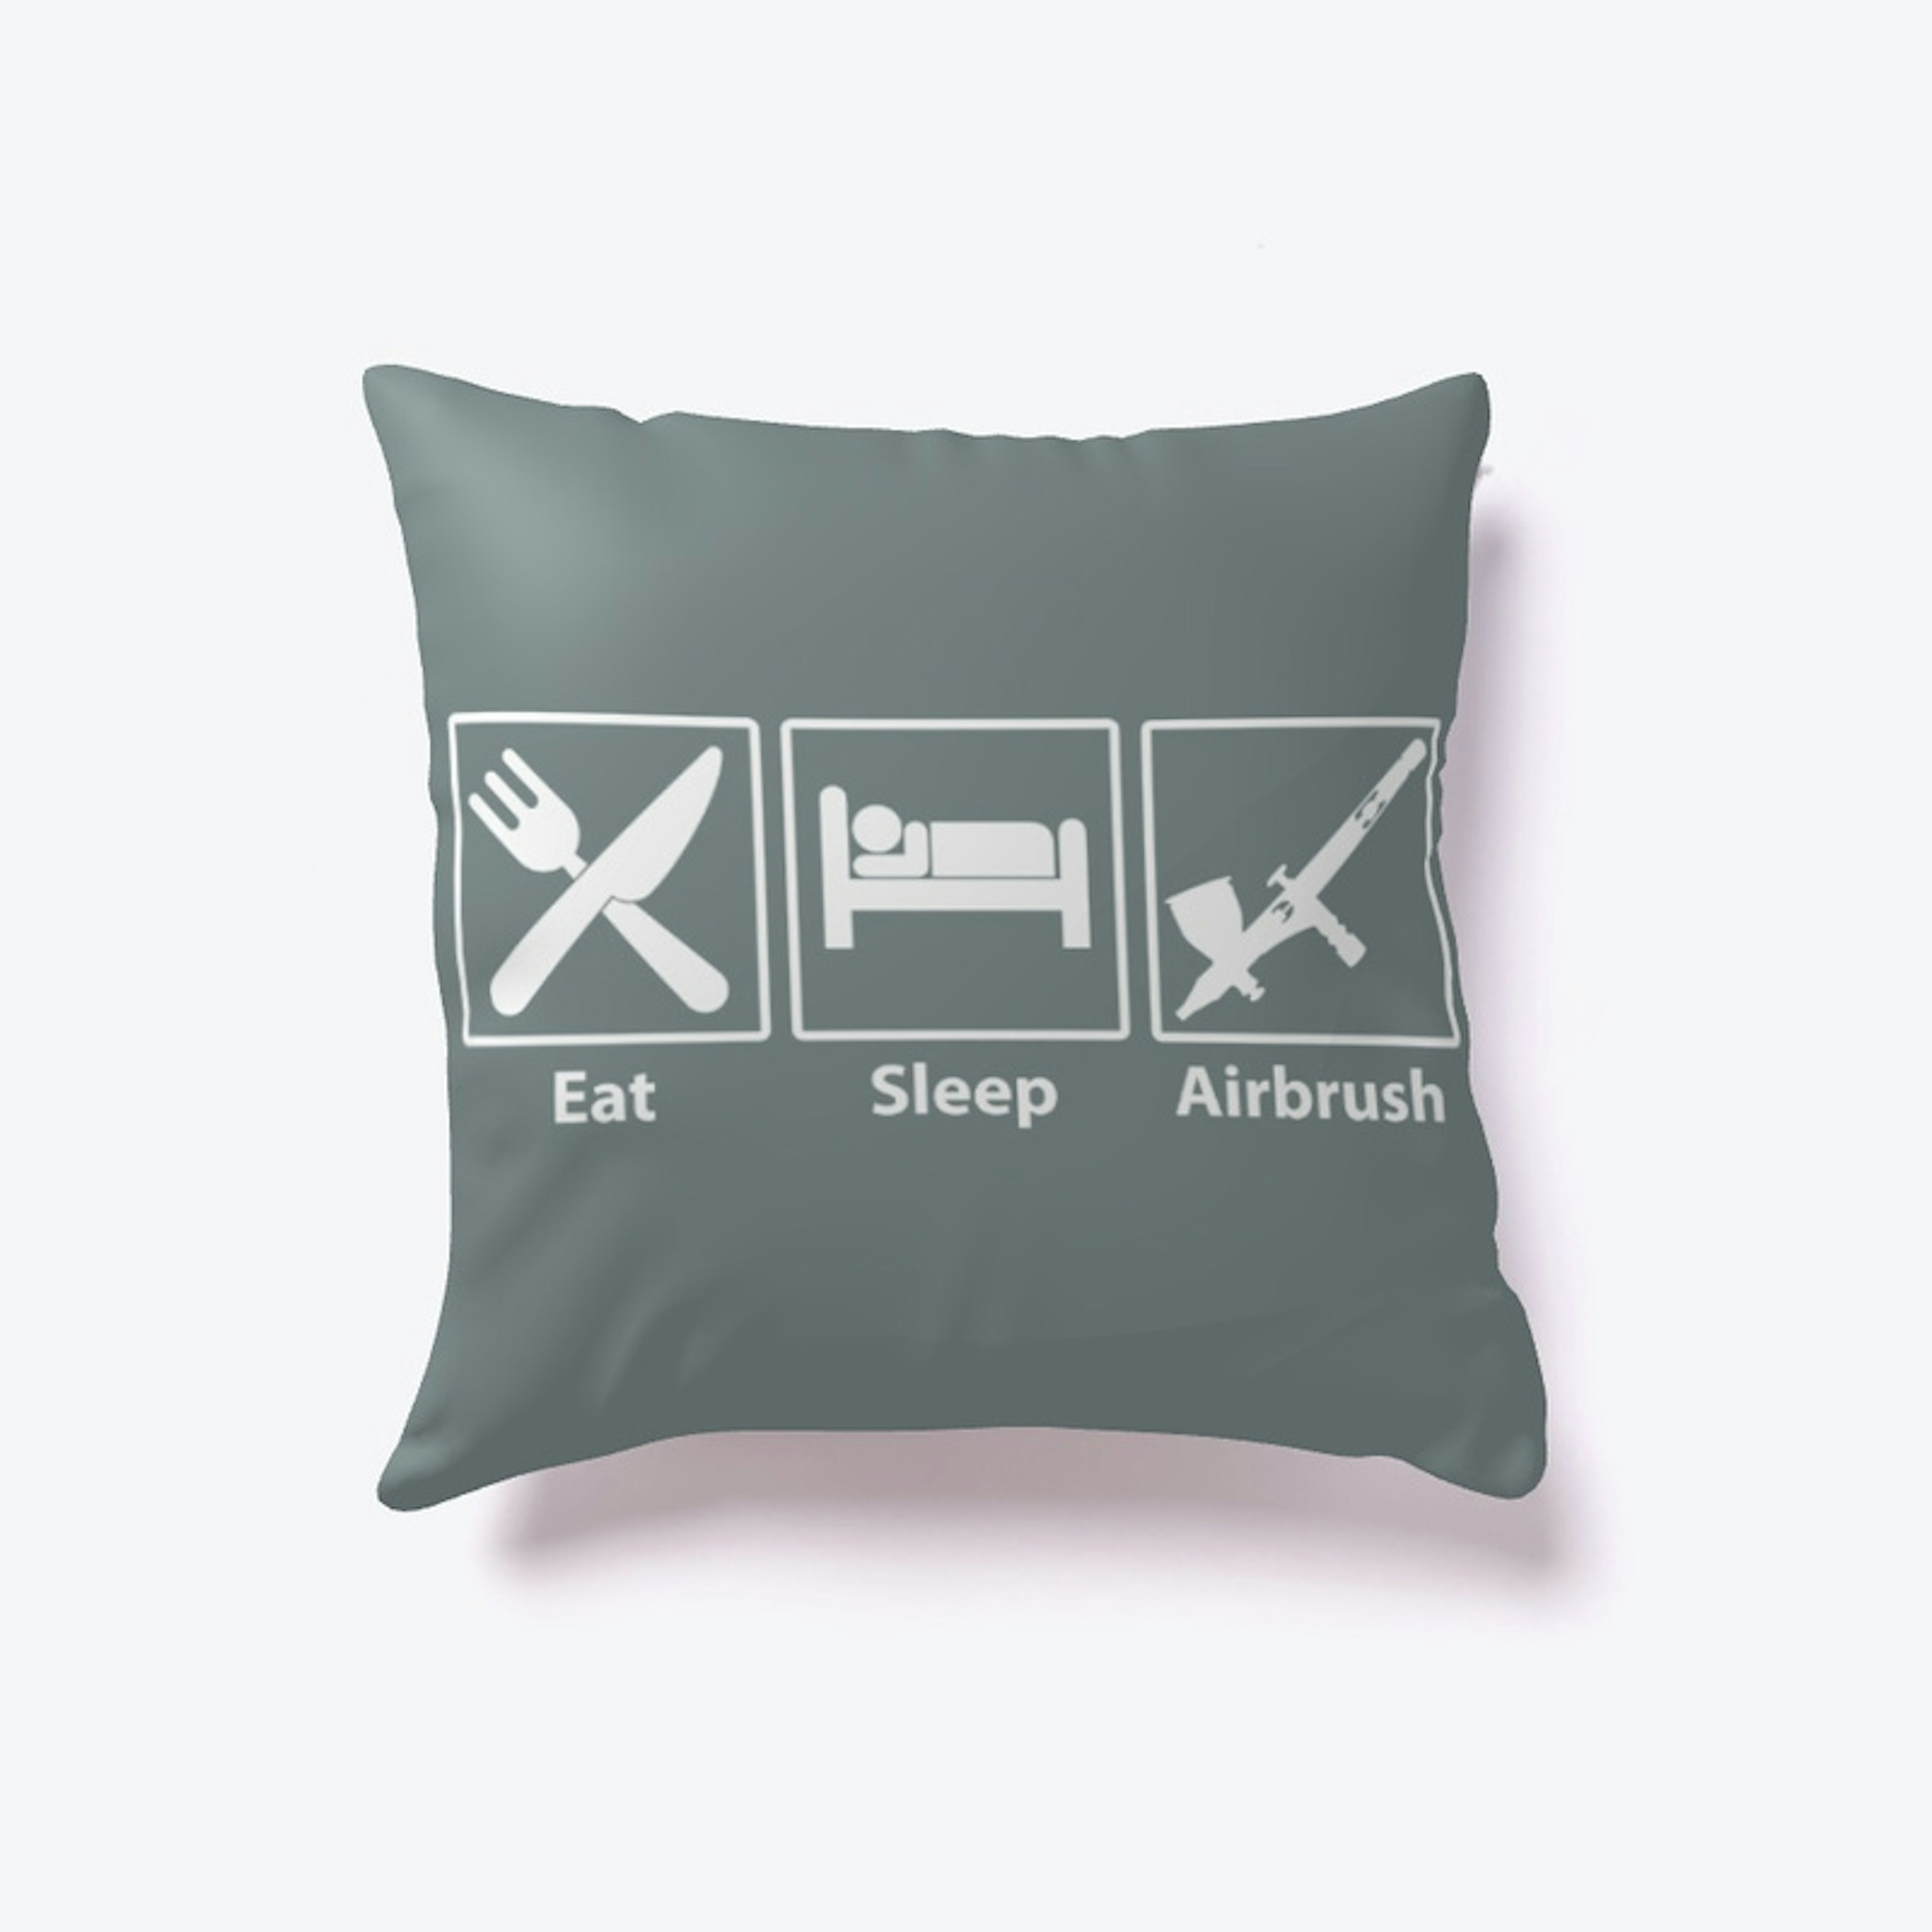 Eat Sleep Airbrush - White Icons